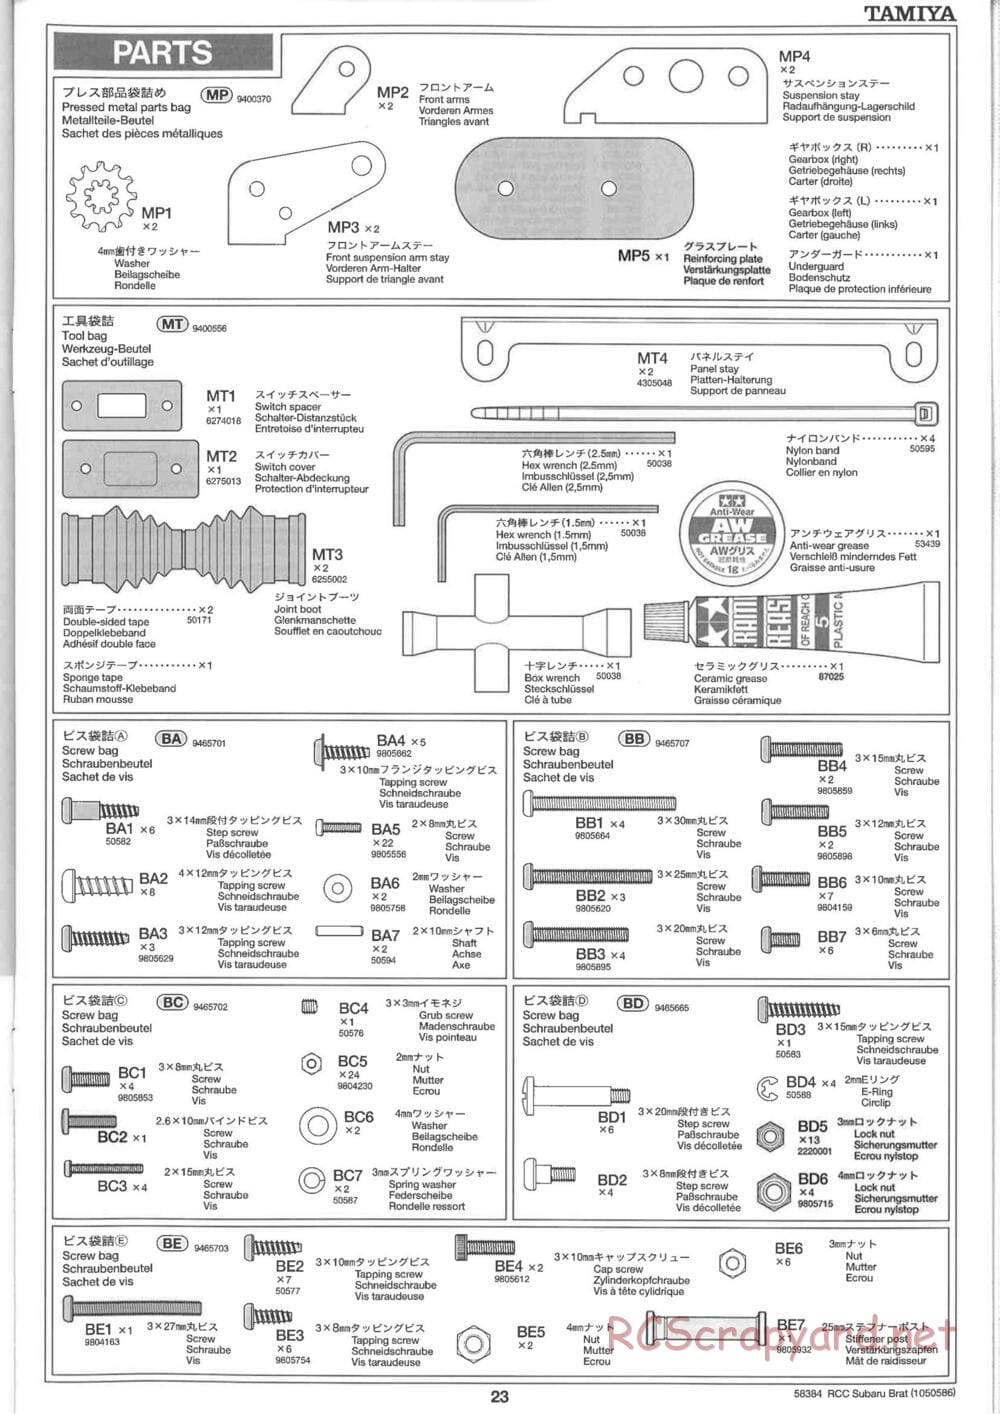 Tamiya - Subaru Brat 2007 - ORV Chassis - Manual - Page 23